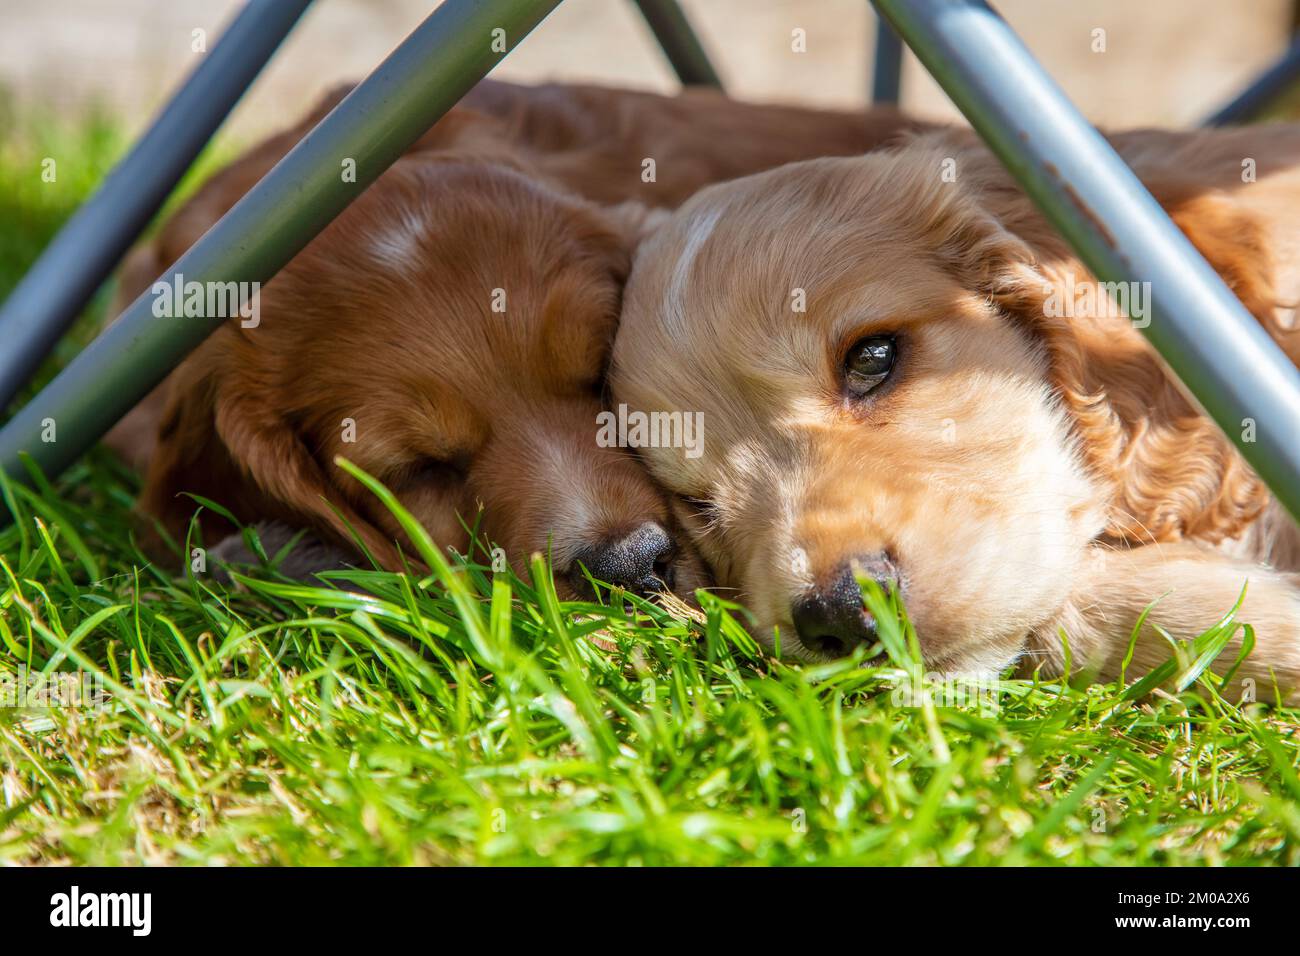 Cute brown puppy dogs sleeping in sunshine on grass uner a garden chair Stock Photo